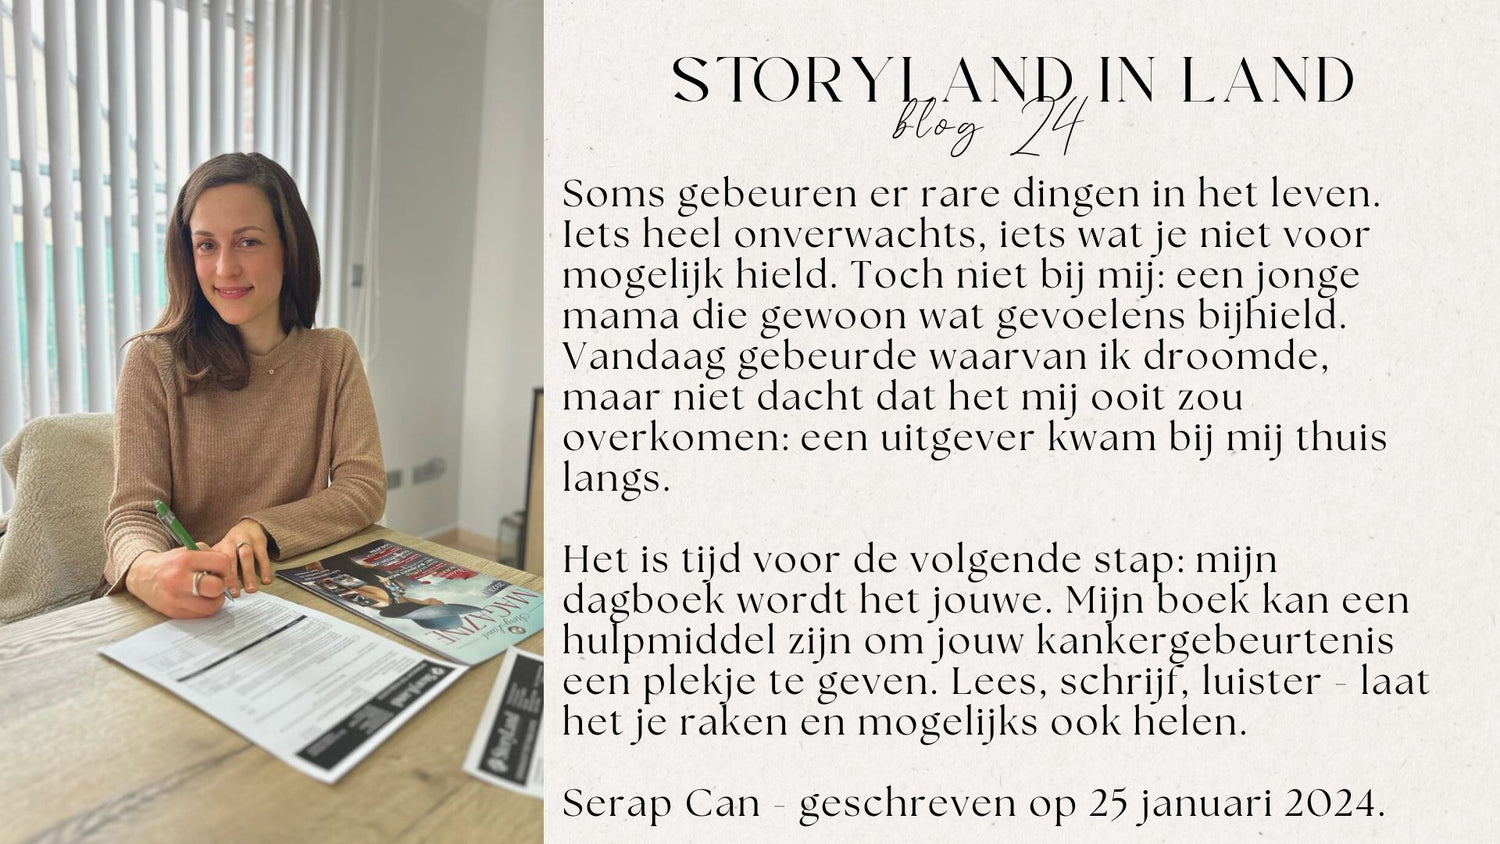 24. Storyland in land.